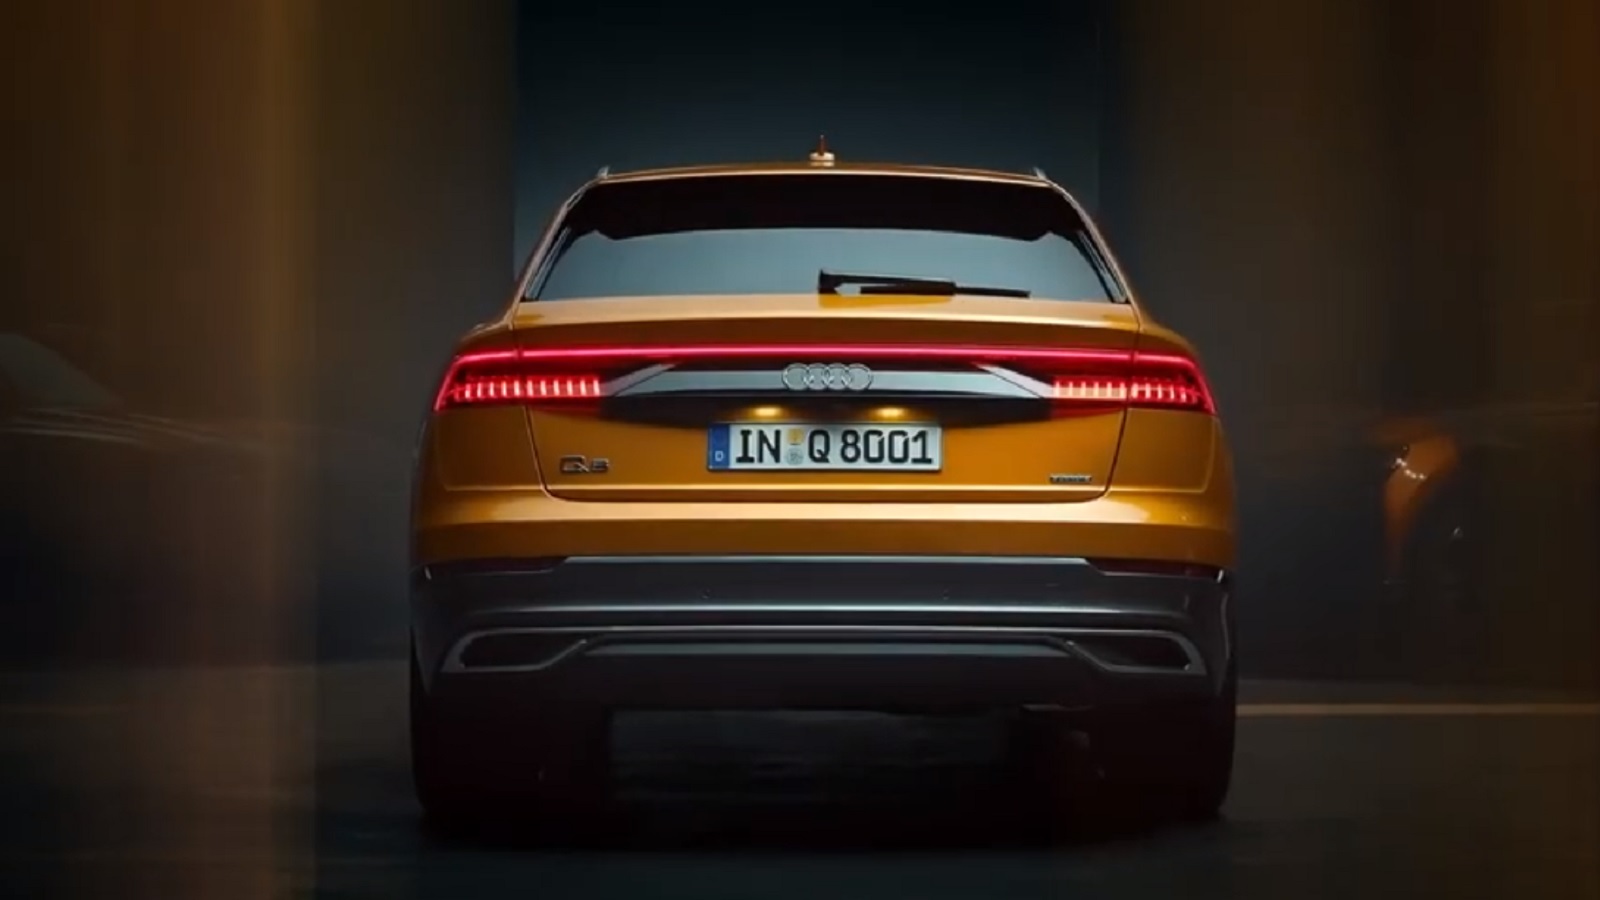 Audi Reimagines All of Its Q8’s Dimensions